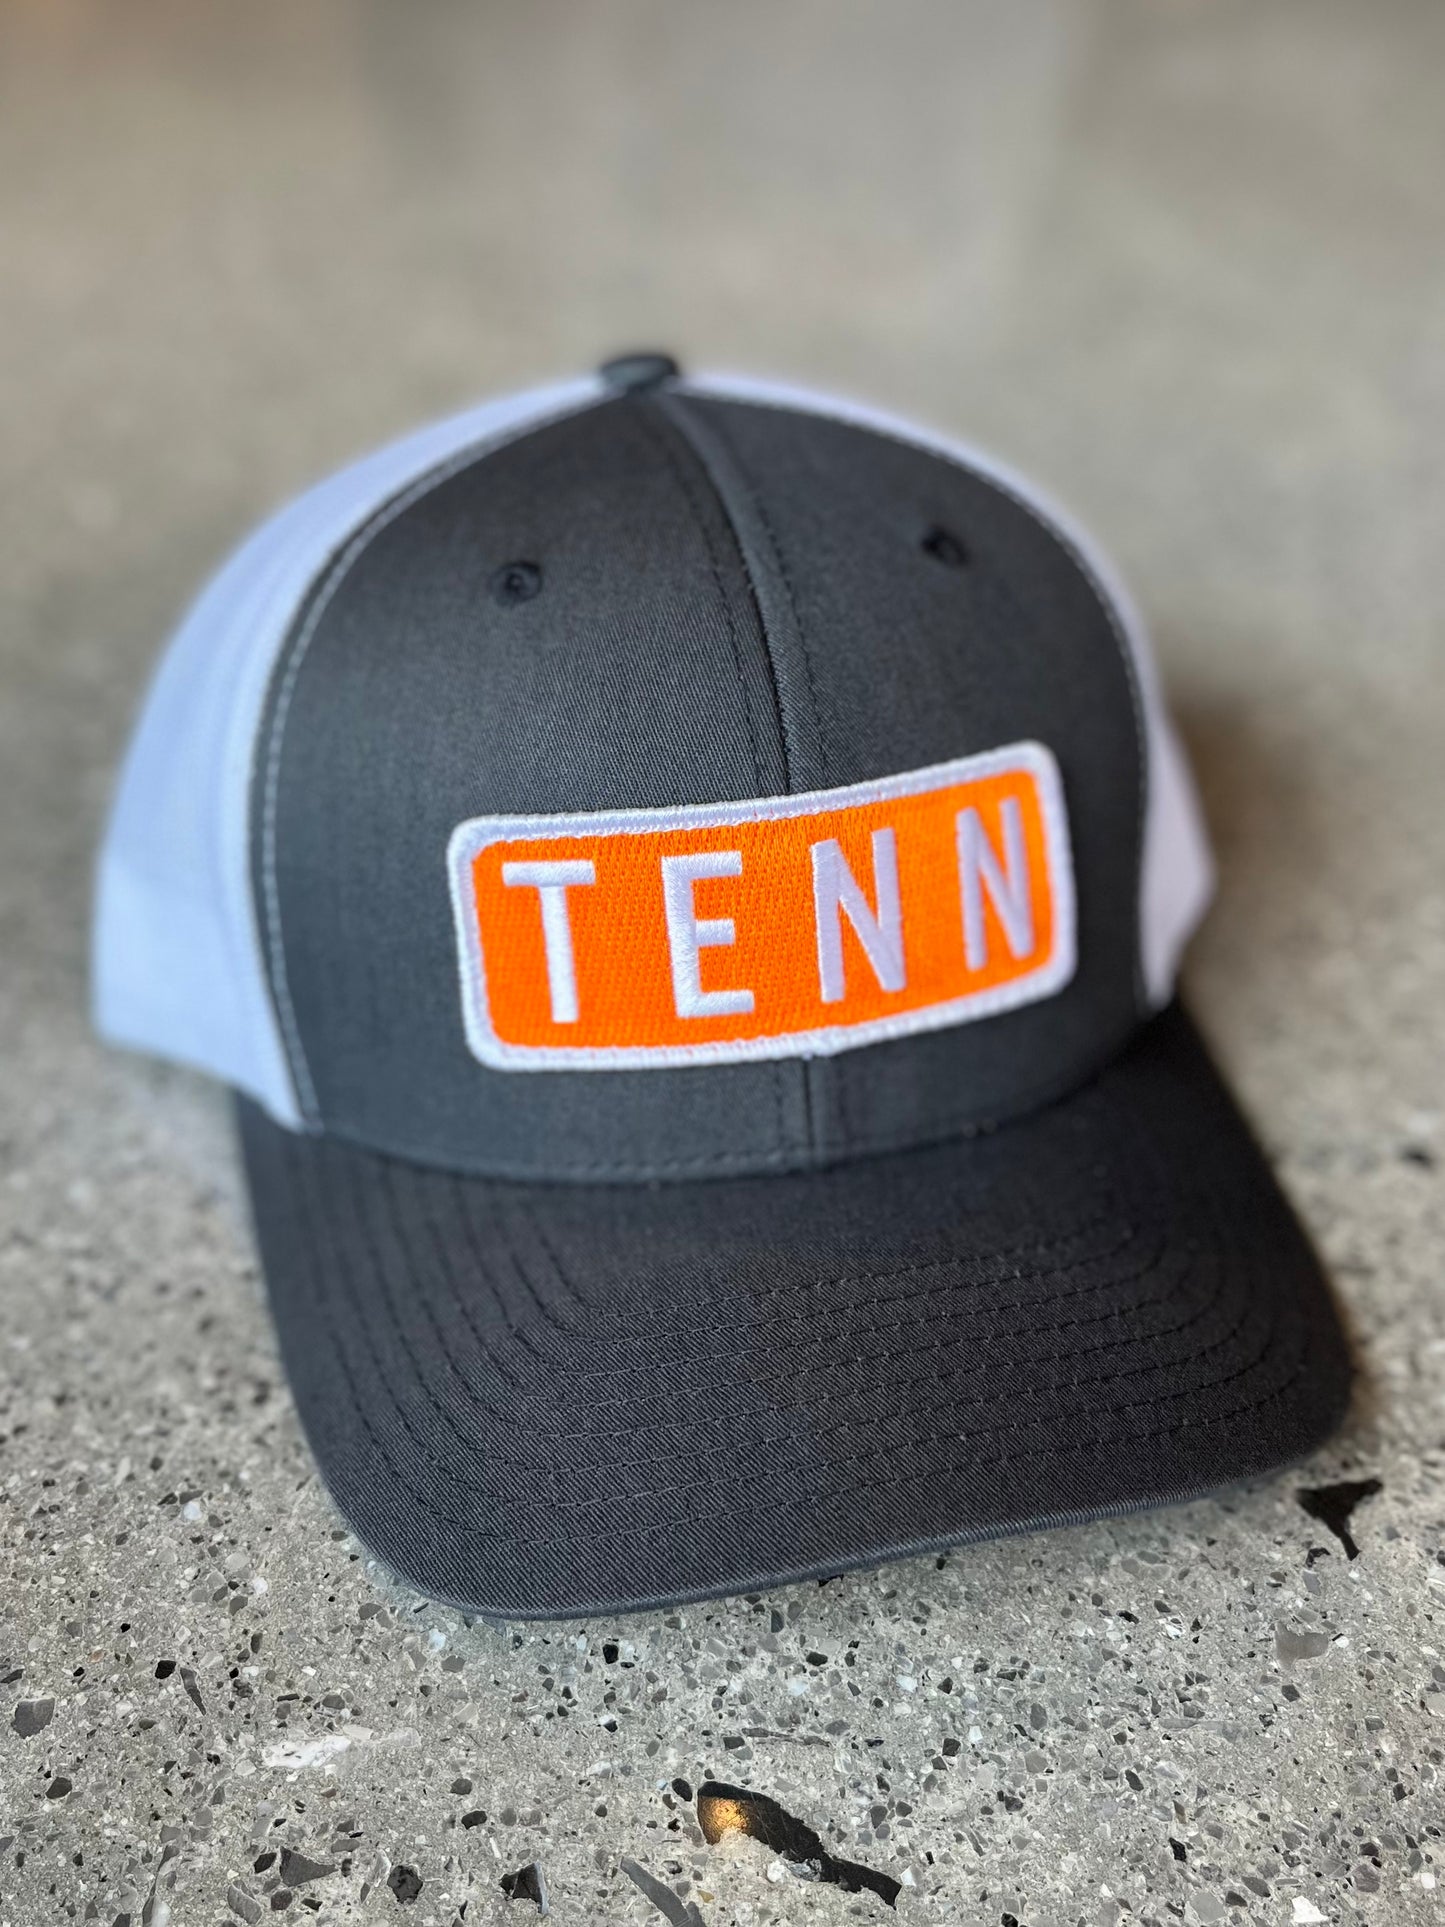 The Gameday Tenn Trucker Hat